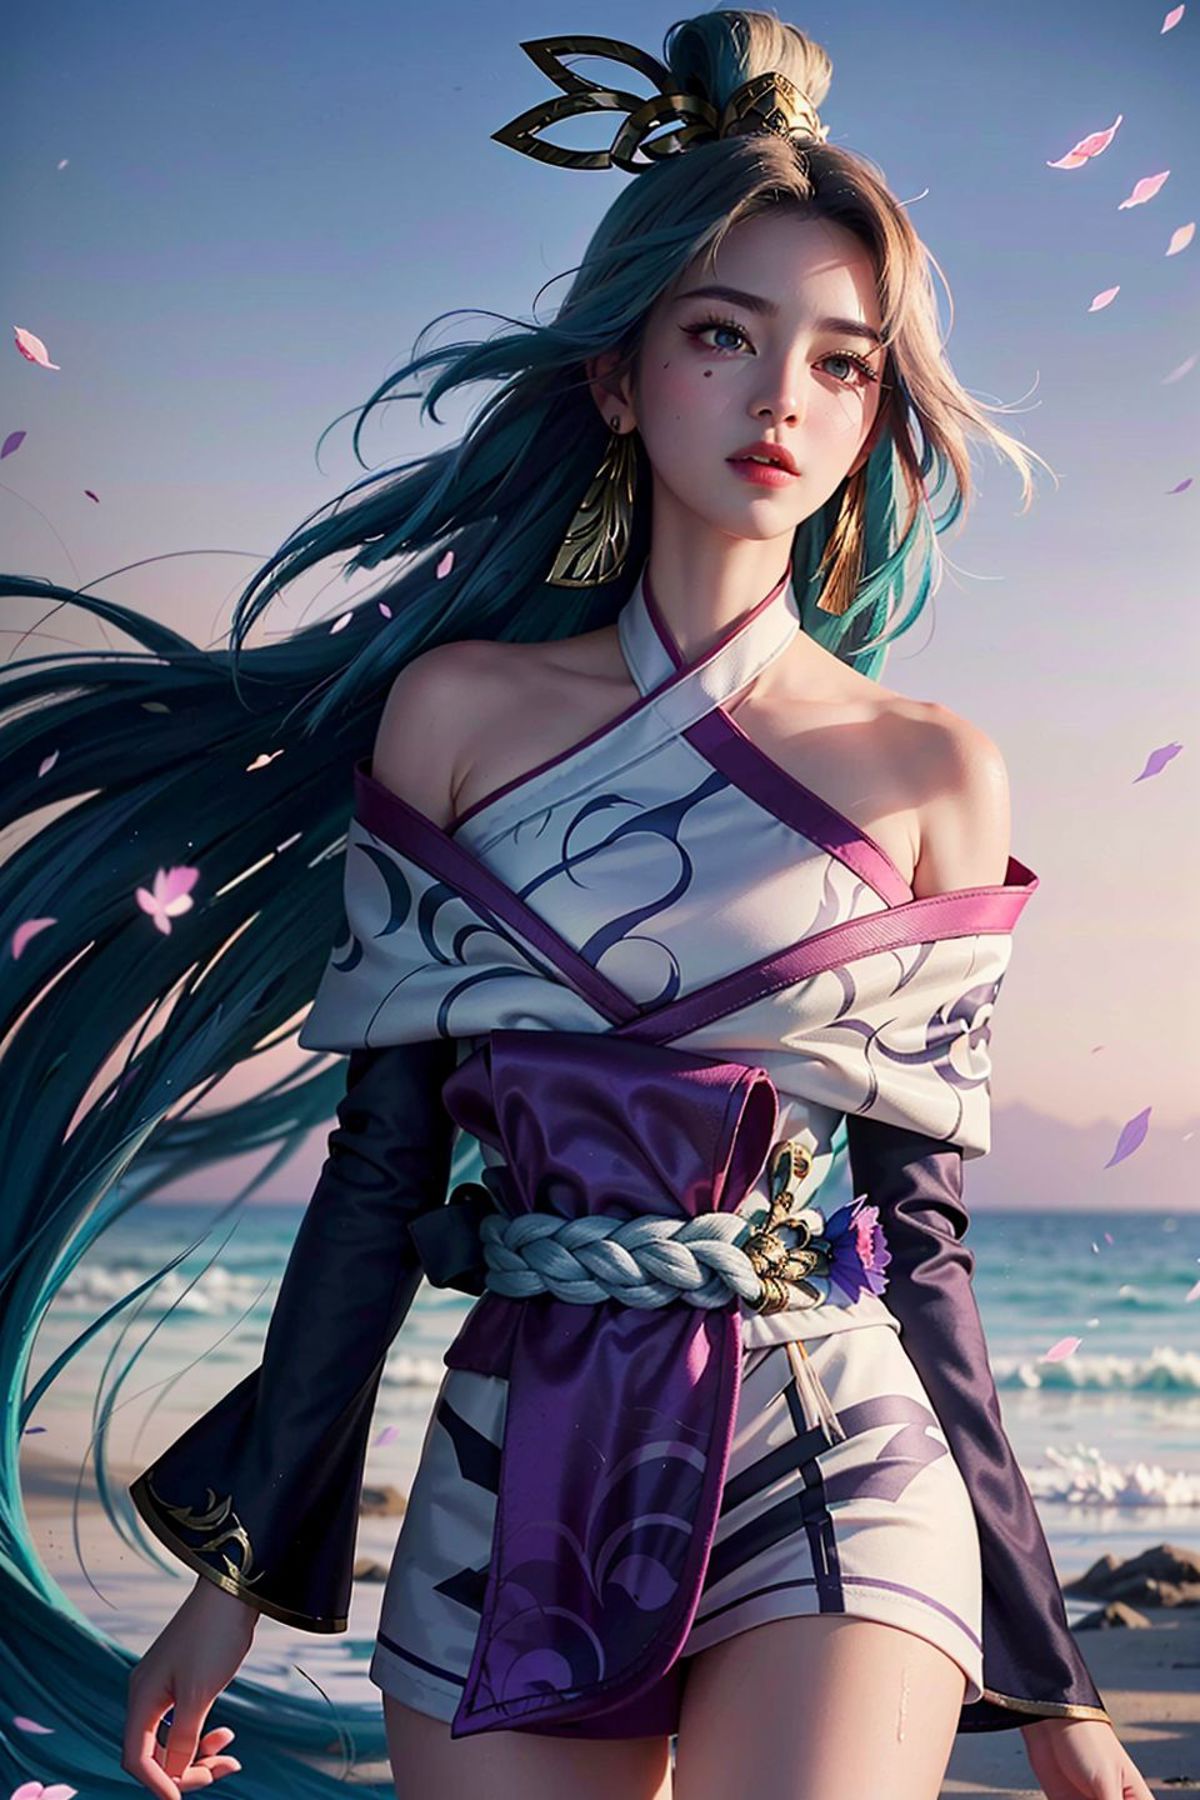 Spirit Blossom Soraka | League of Legends image by ylnnn